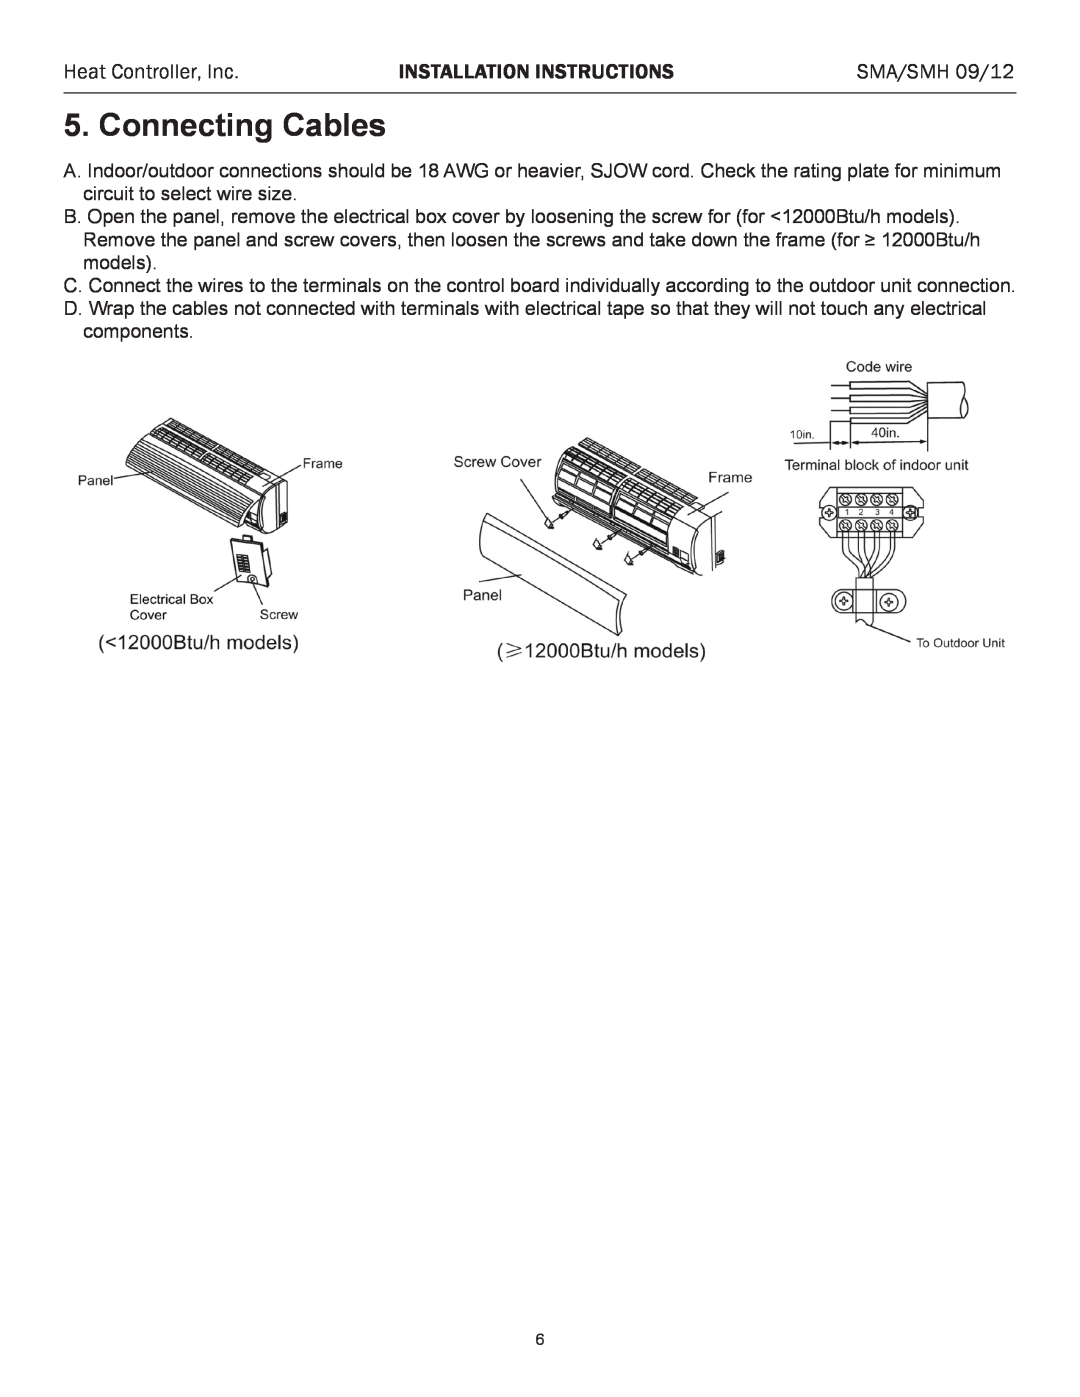 Heat Controller SMH 12, SMA 12 Connecting Cables, Heat Controller, Inc, Installation Instructions, SMA/SMH 09/12 